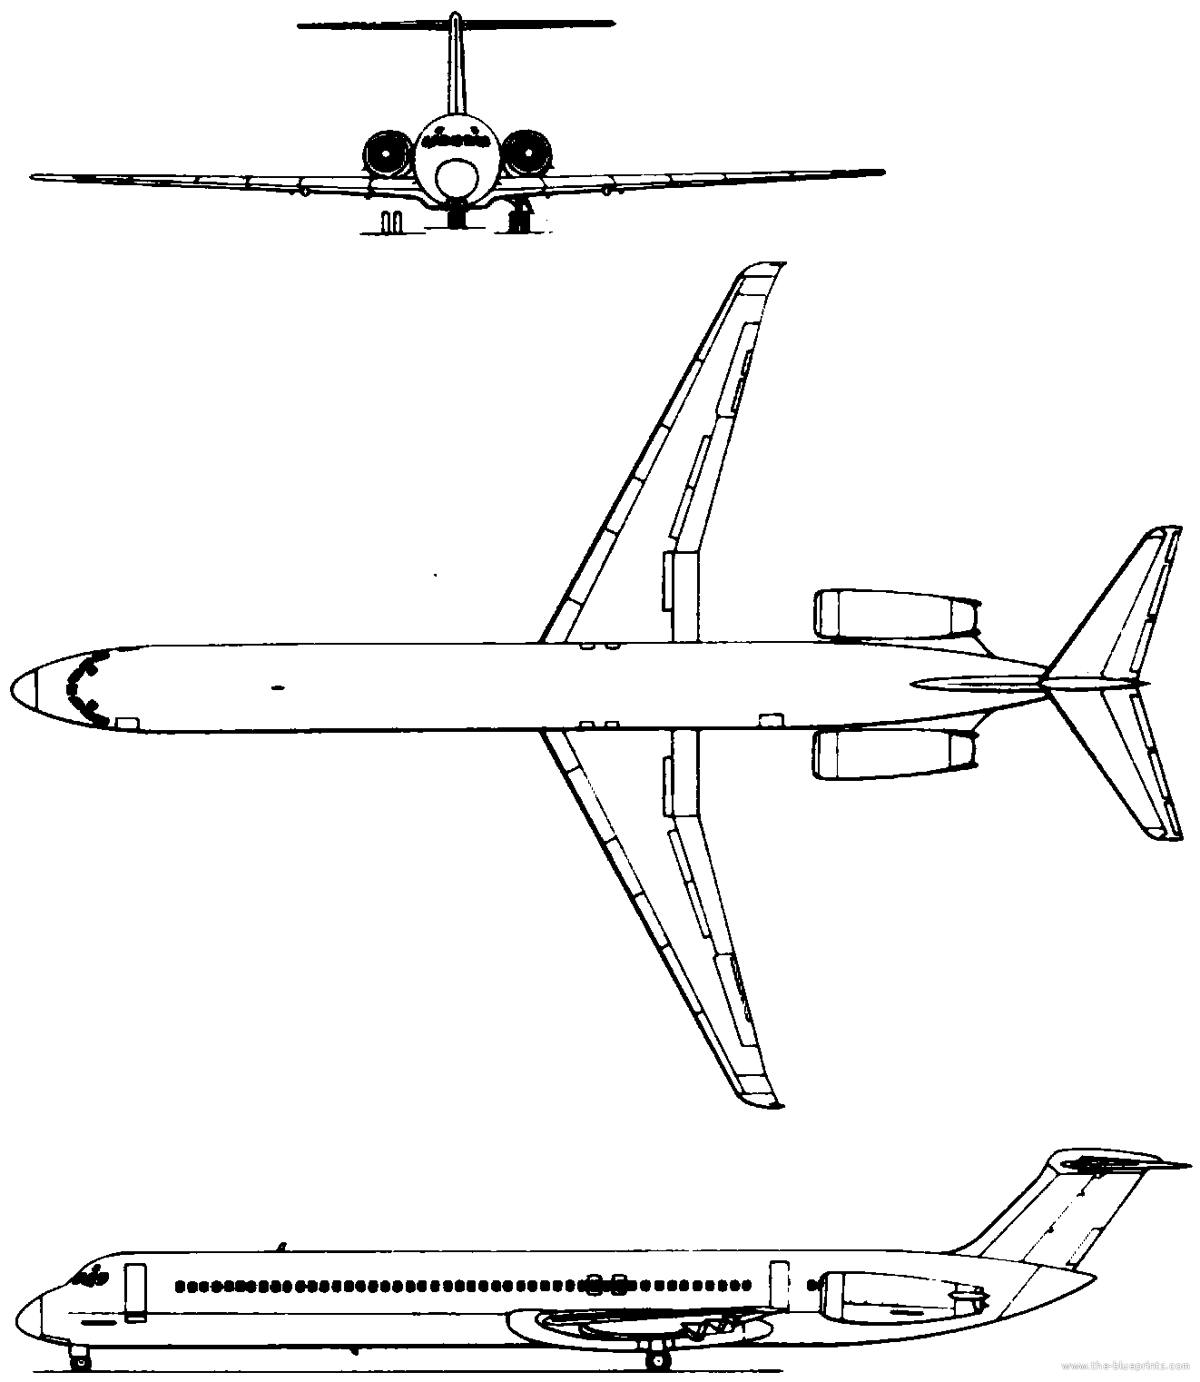 McDonnel Douglas MD-83 3-side view drawing